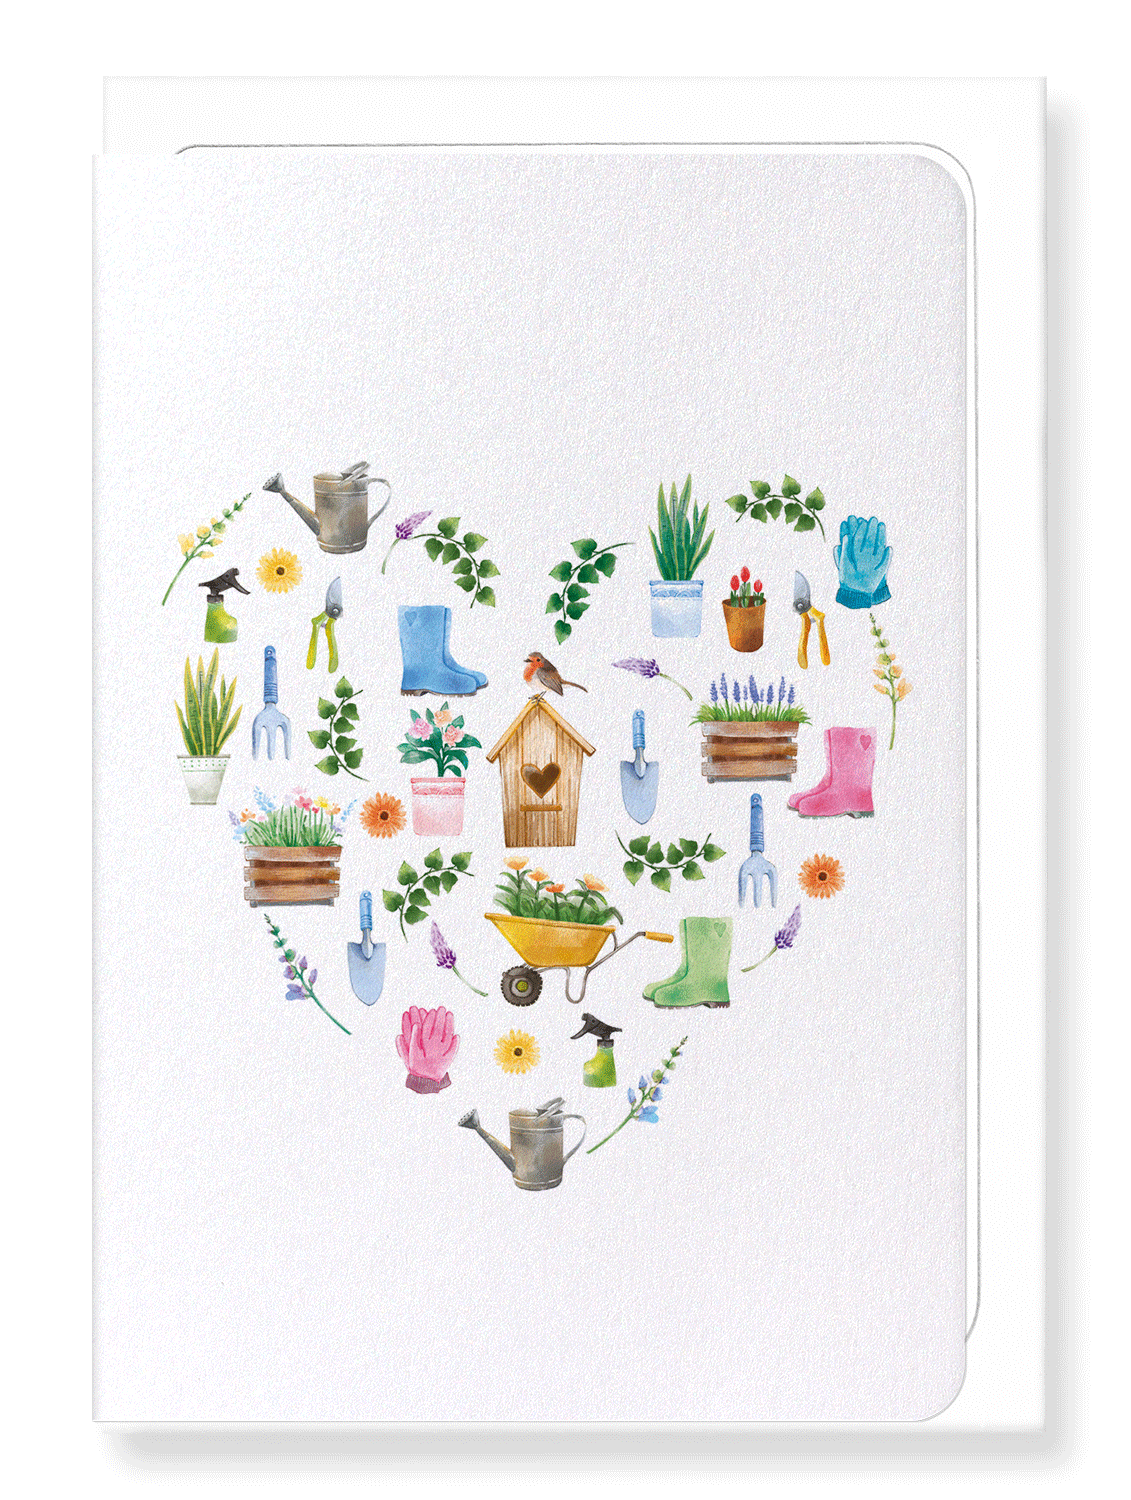 Ezen Designs - Garden heart - Greeting Card - Front